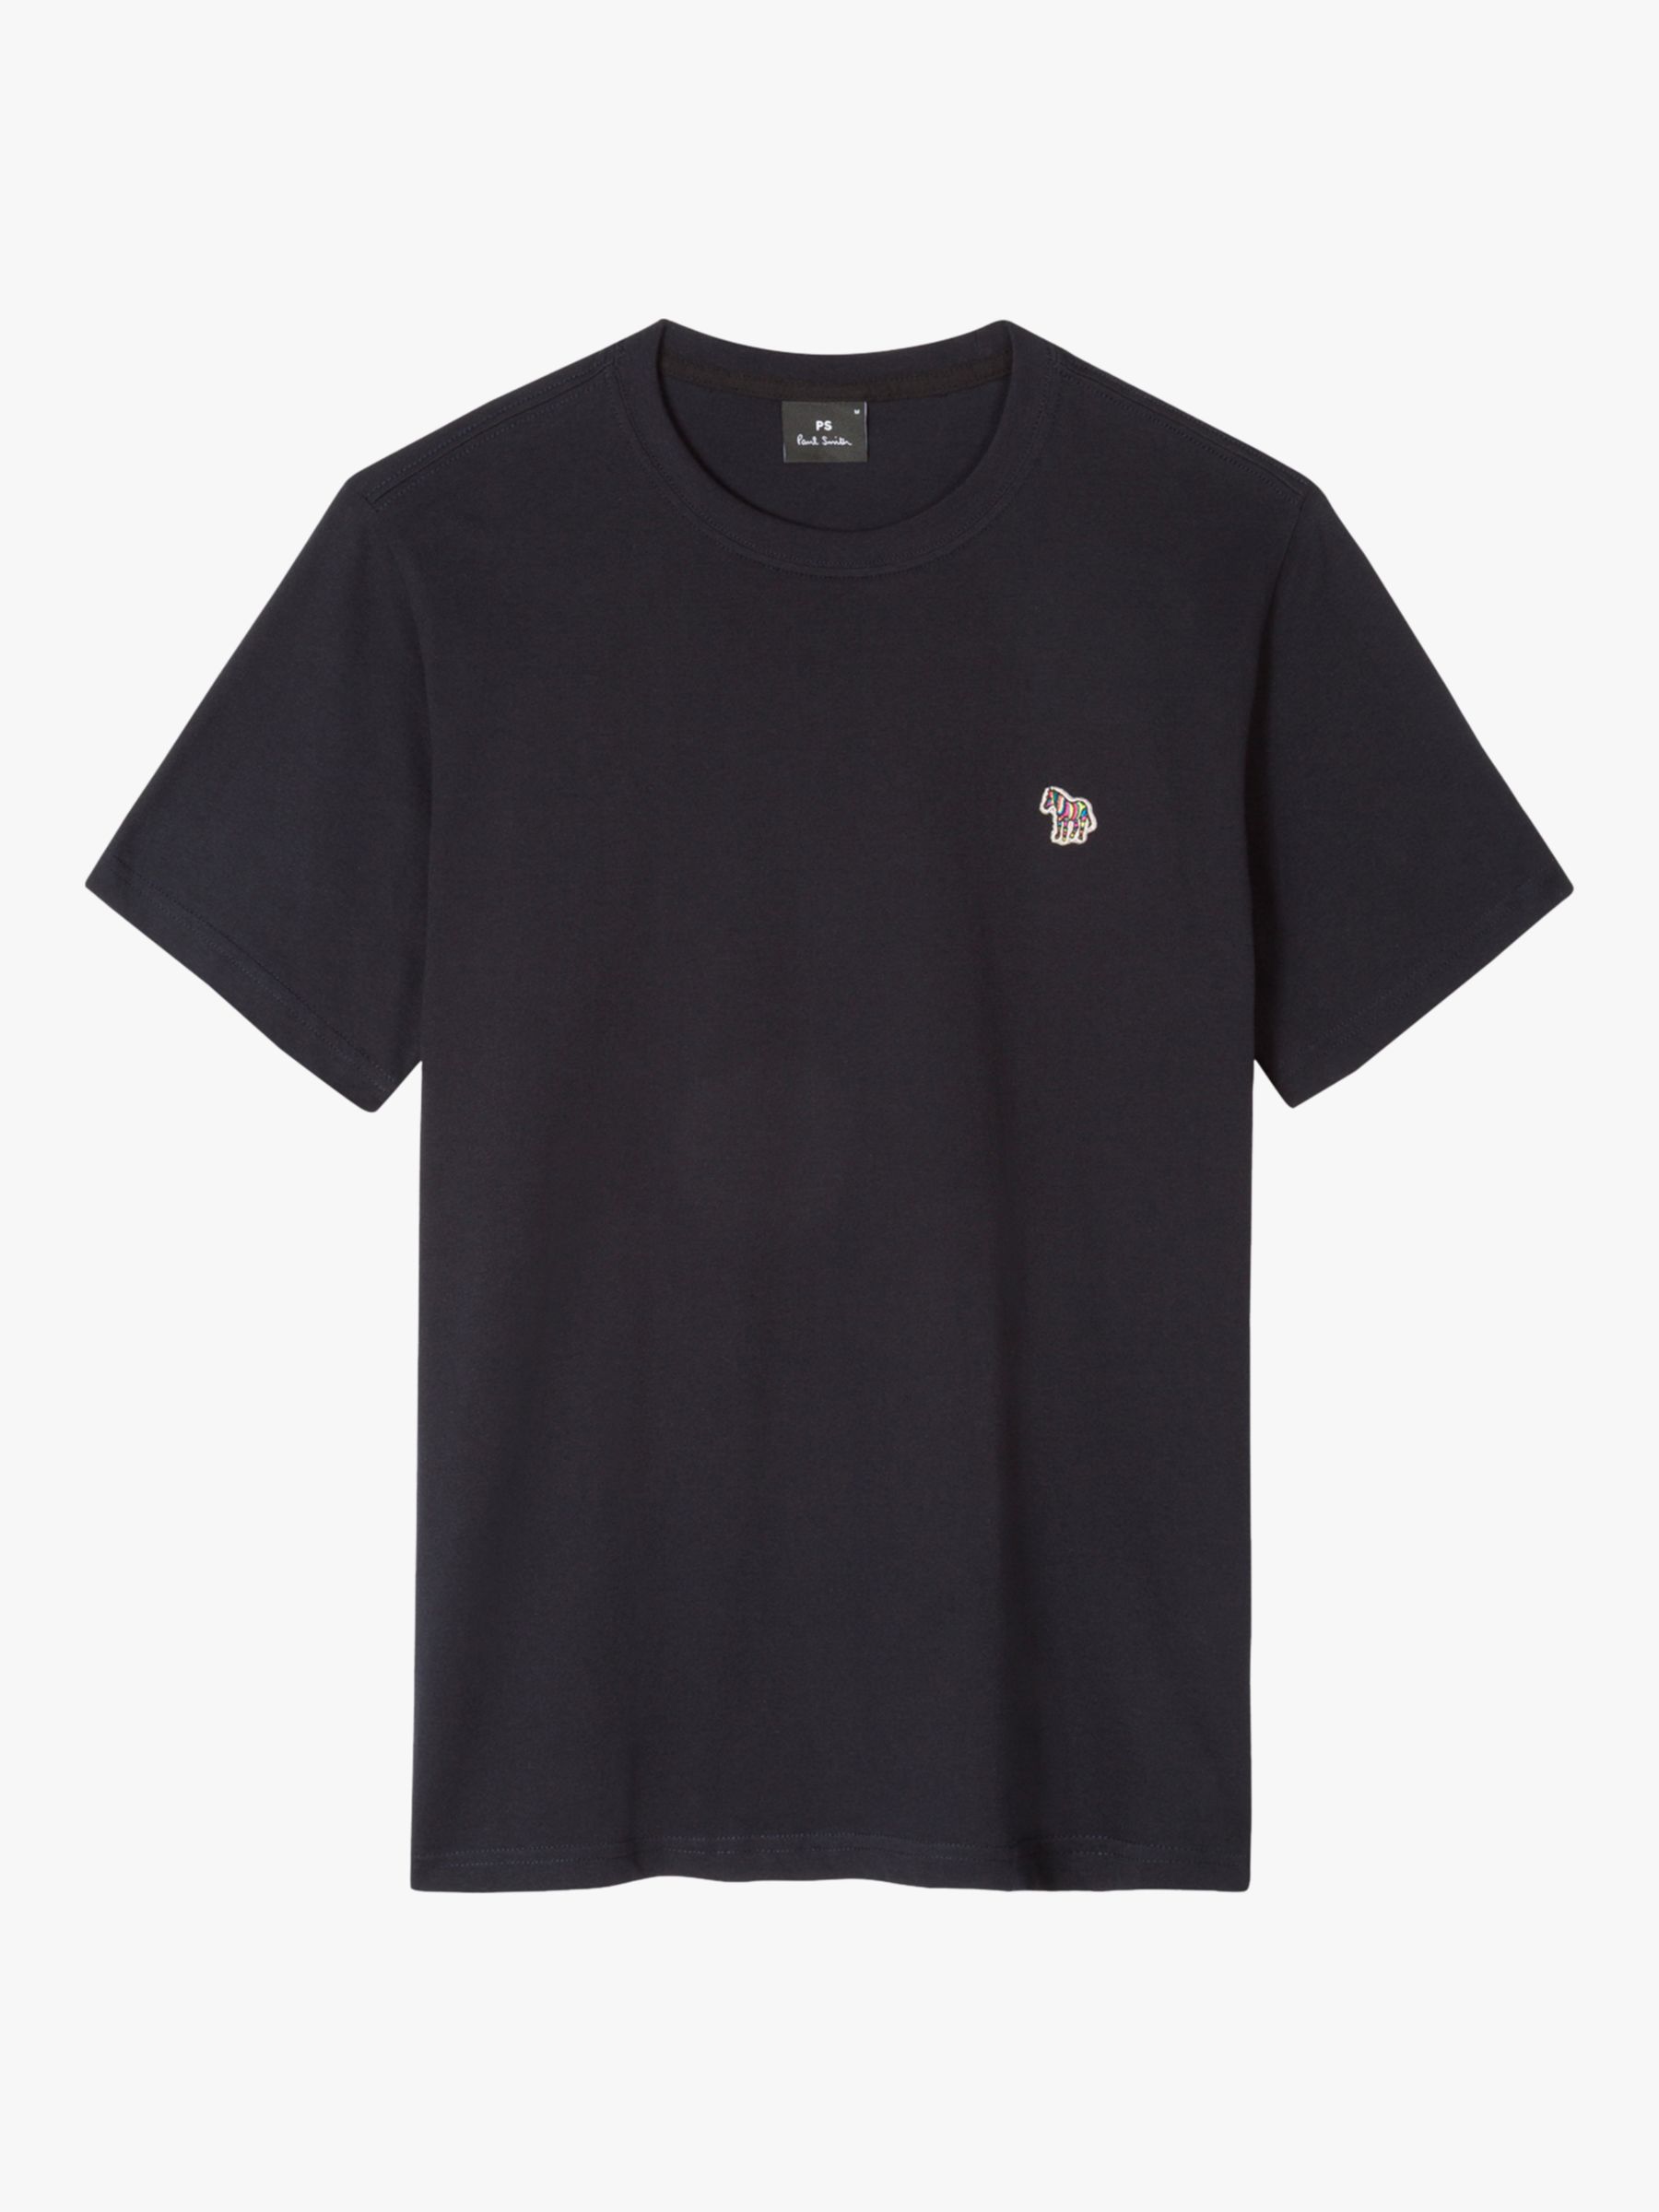 Paul Smith Slim Fit Zebra Organic Cotton T-Shirt, Midnight, M